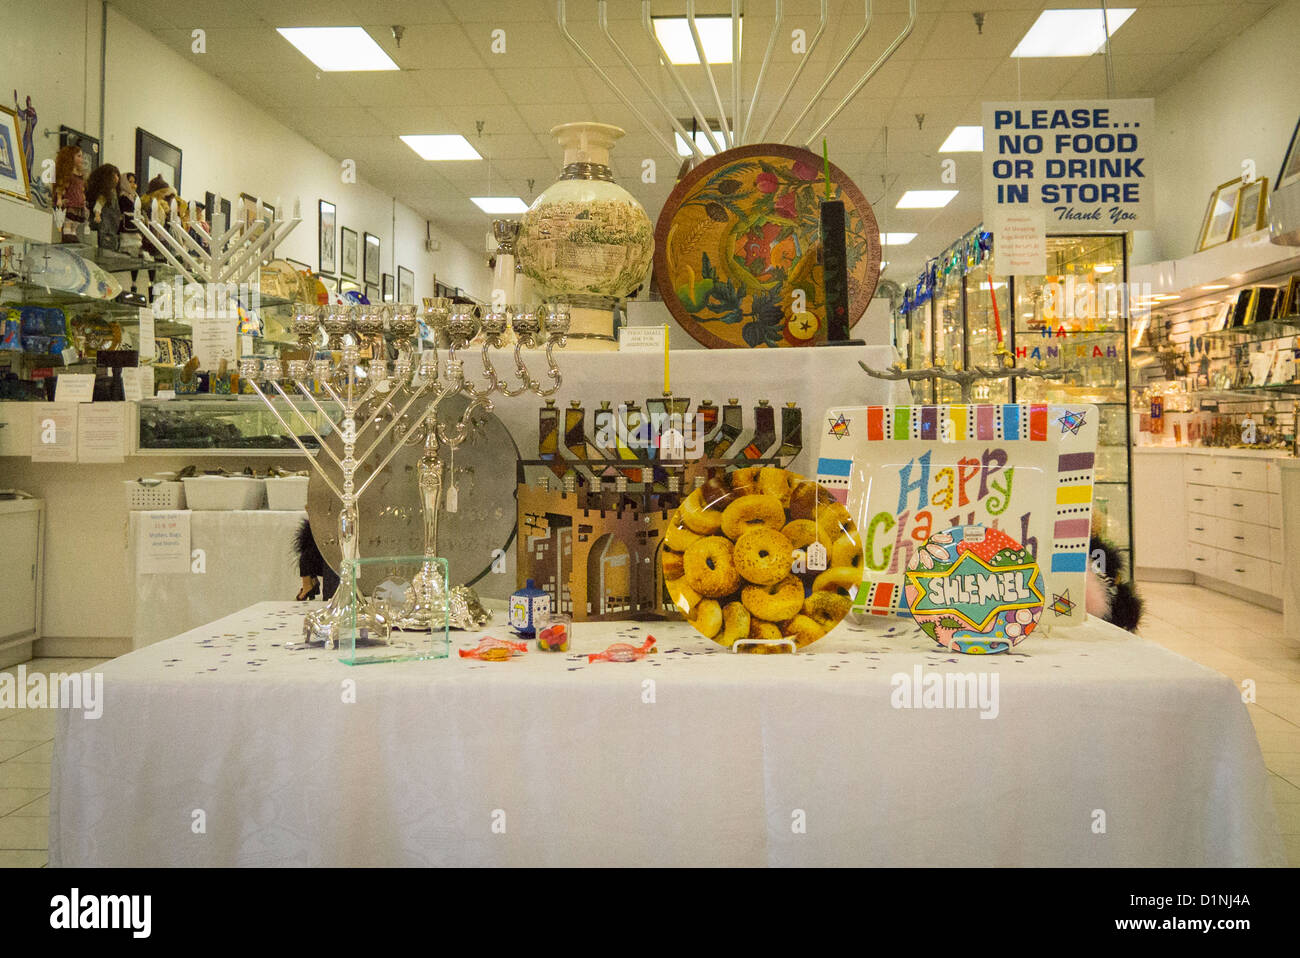 USA Florida Boca Raton Festival Flea Market Mall Traditions Judaica Jewish goods store shop display menorah hanukkiya etc Stock Photo